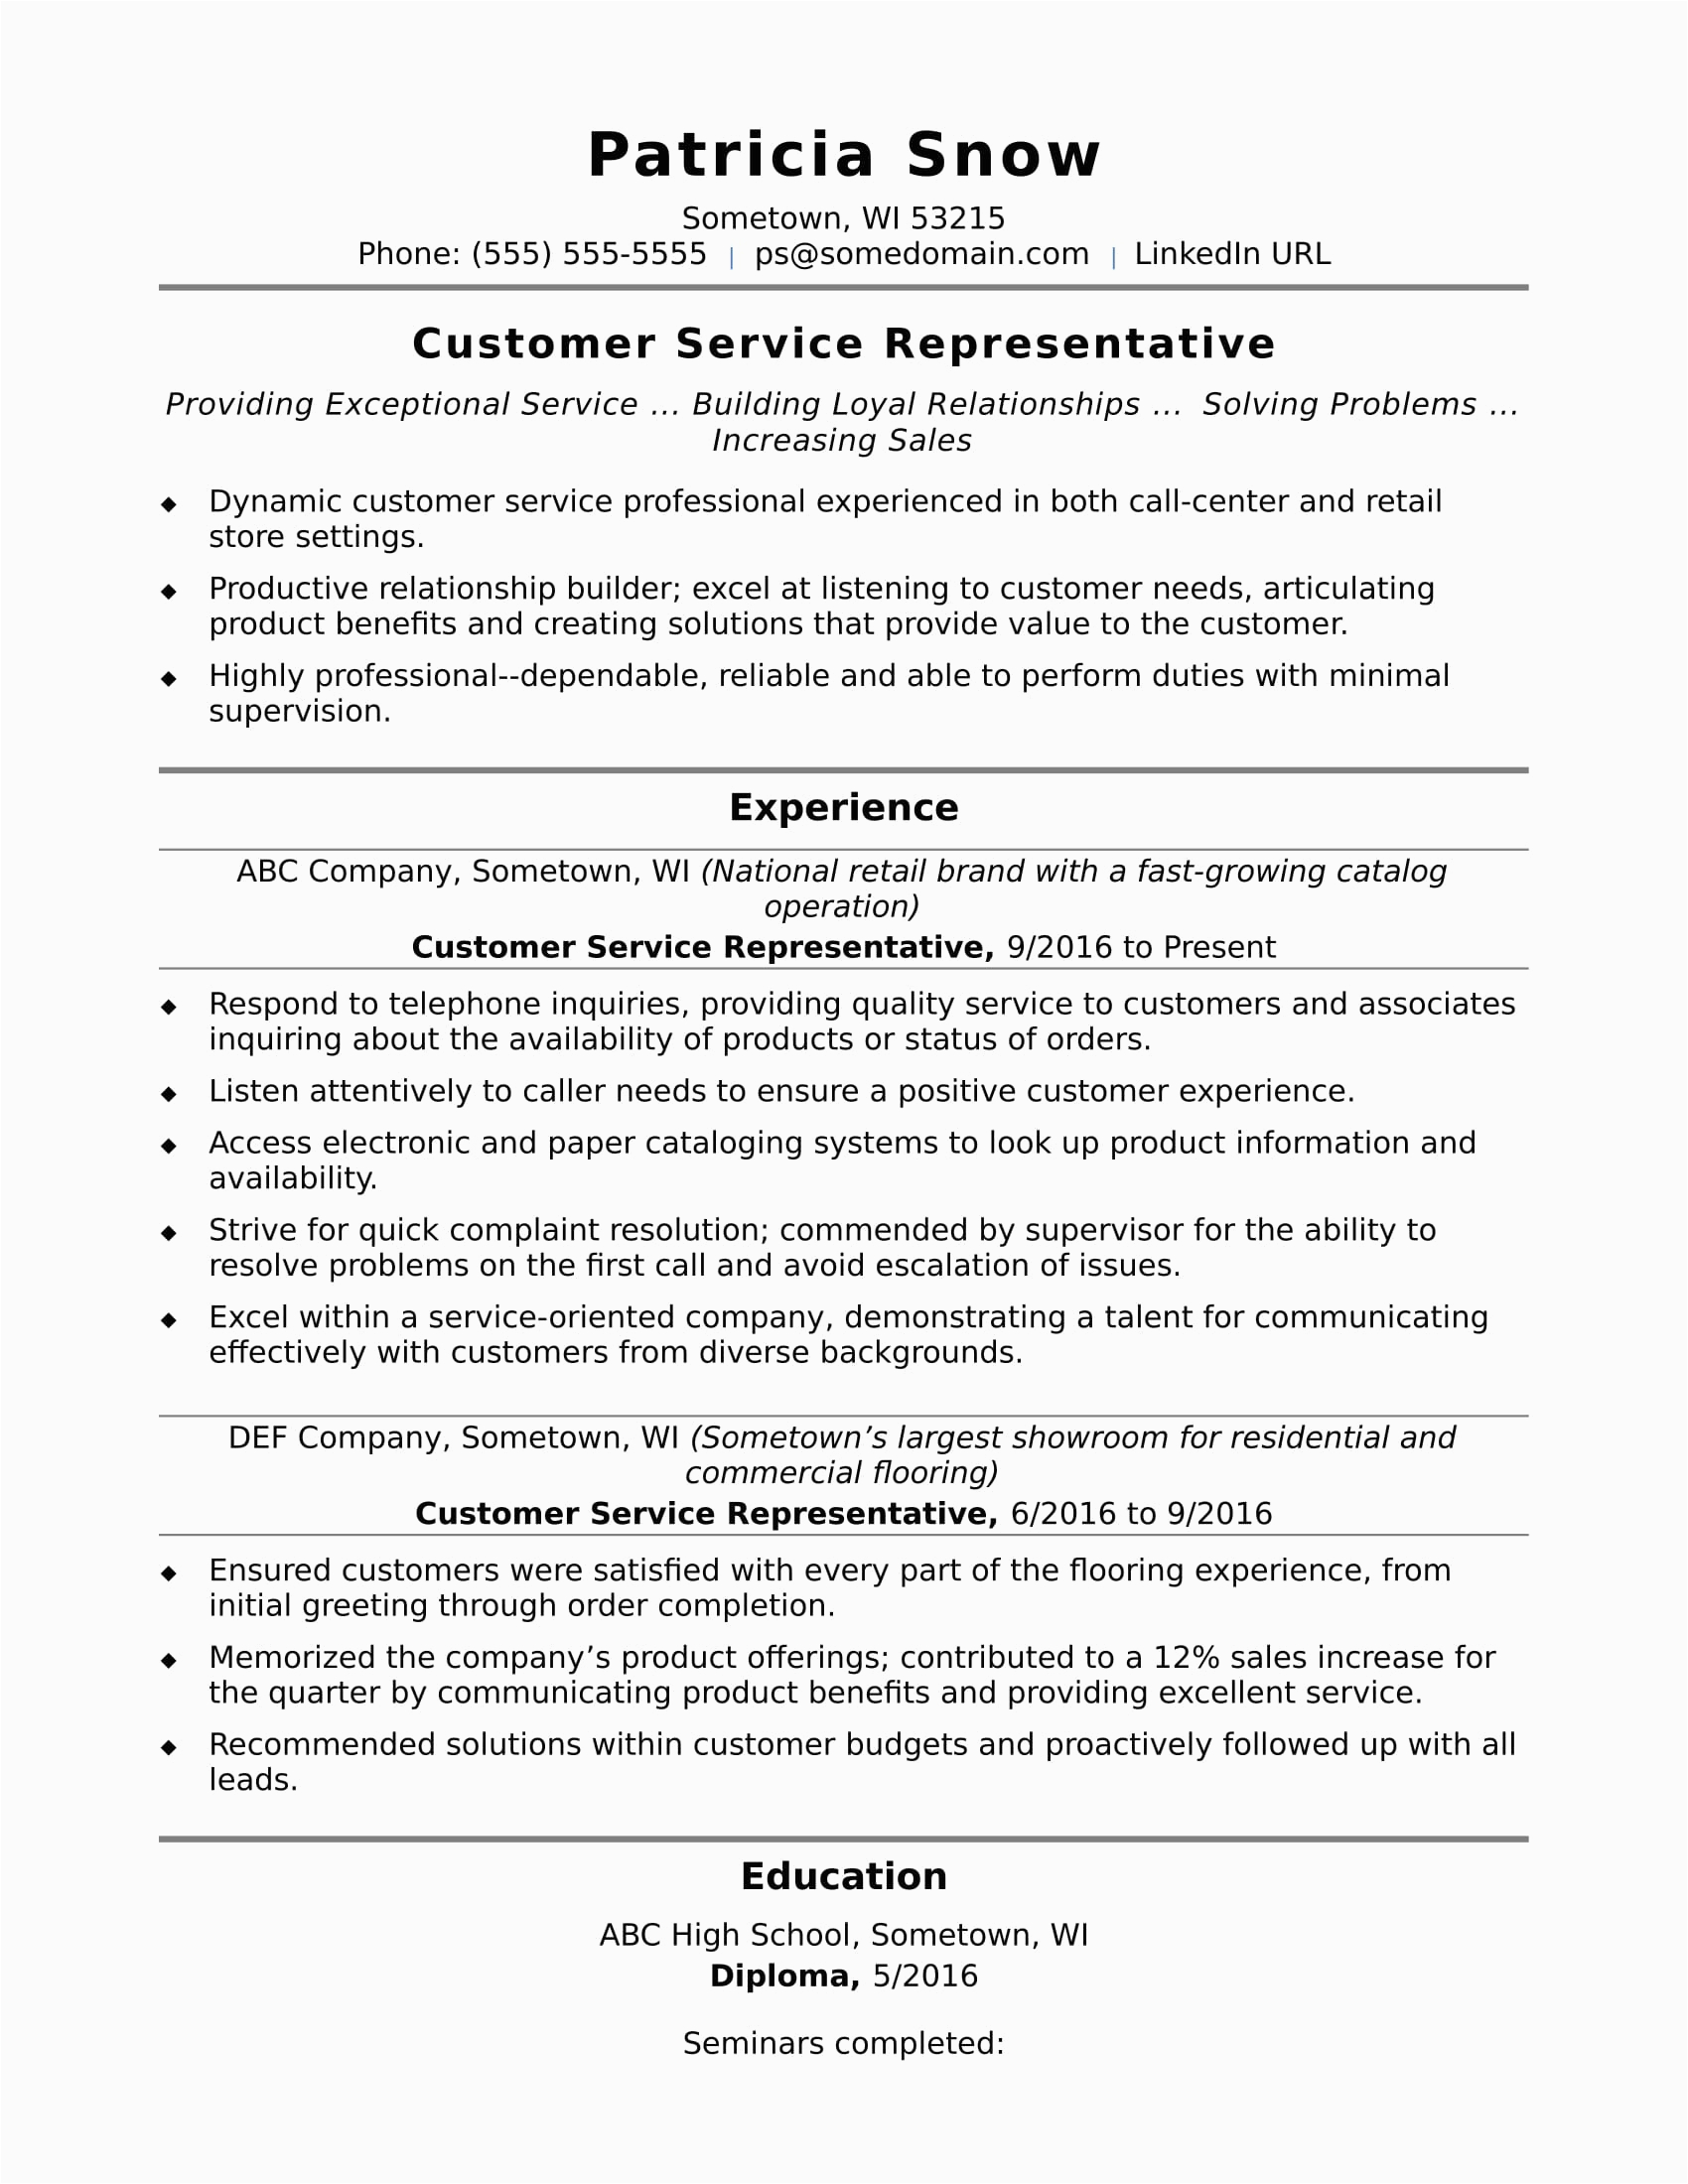 Sample Resumes for Entry Level Customer Service Positions Entry Level Customer Service Resume Sample